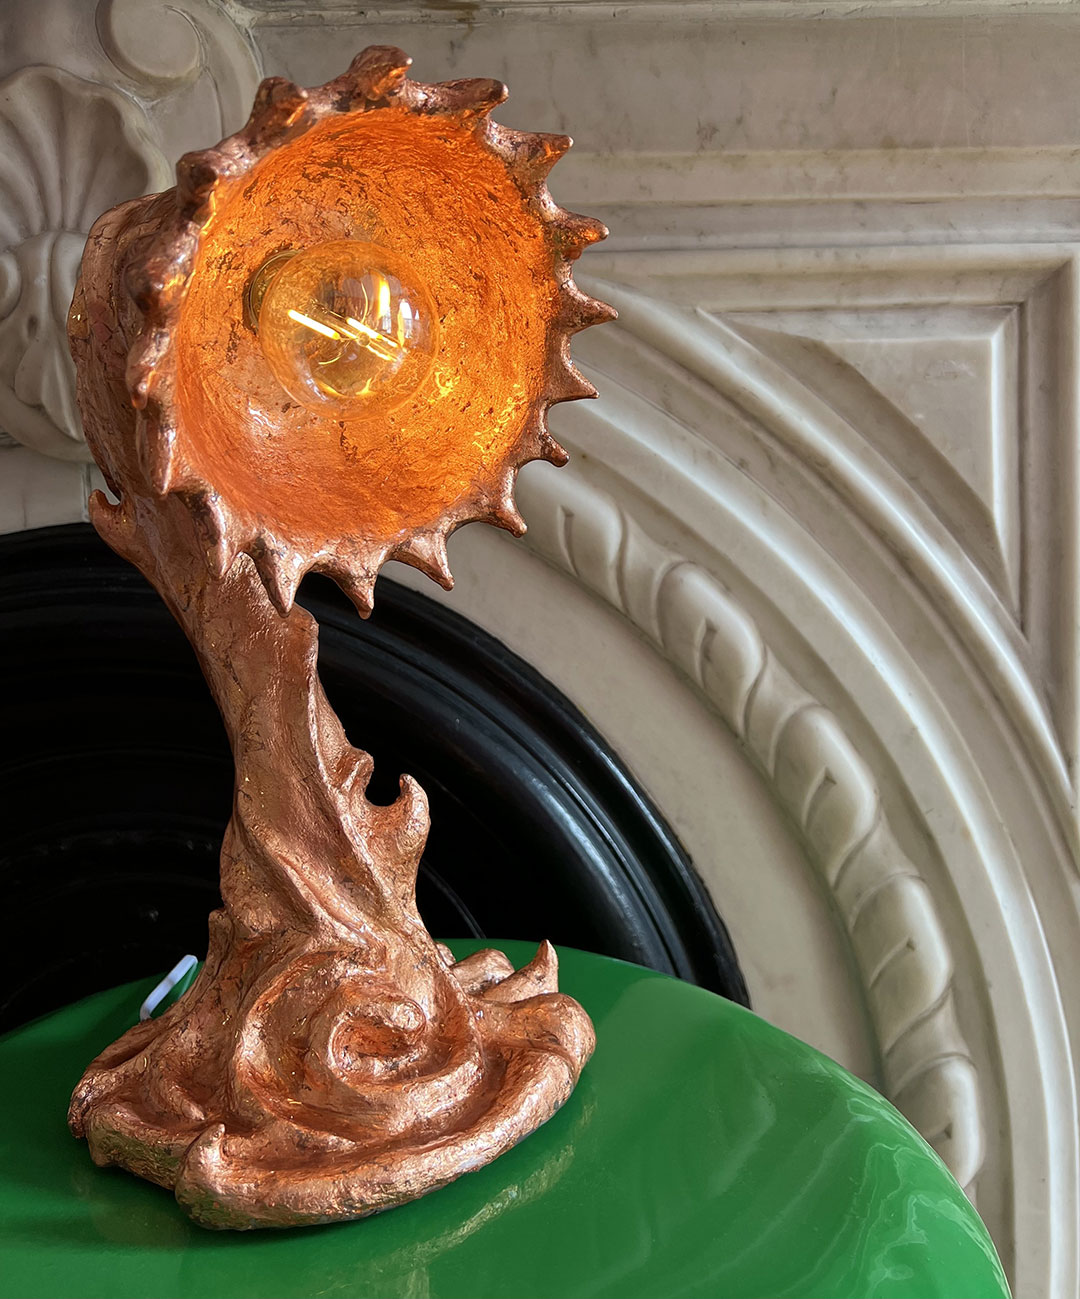 The alien-like sculptural table lamp by Nicholas Devlin